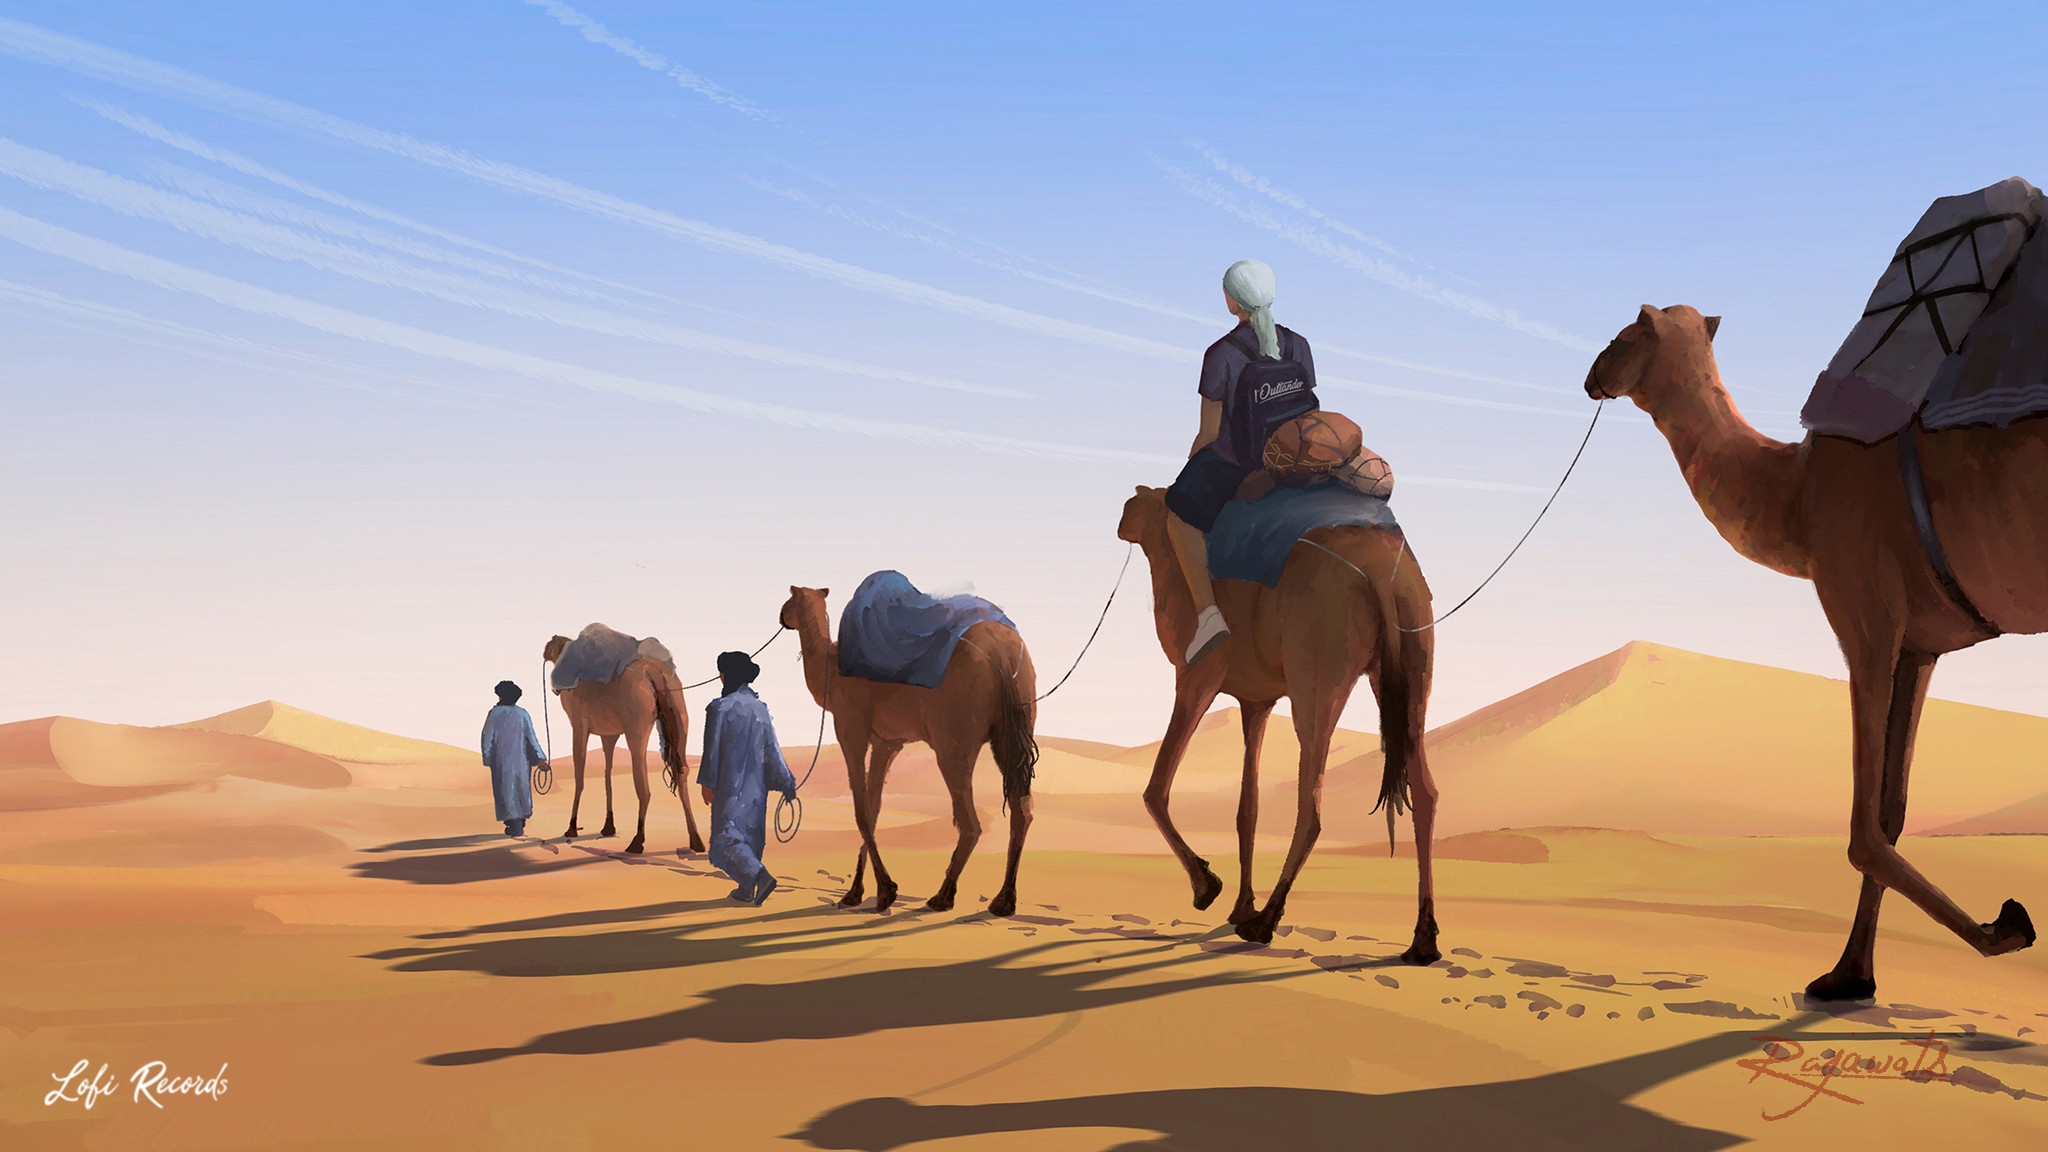 Другой караван. Верблюд в пустыне. Верблюд арт. Караван в пустыне. Караван верблюдов.